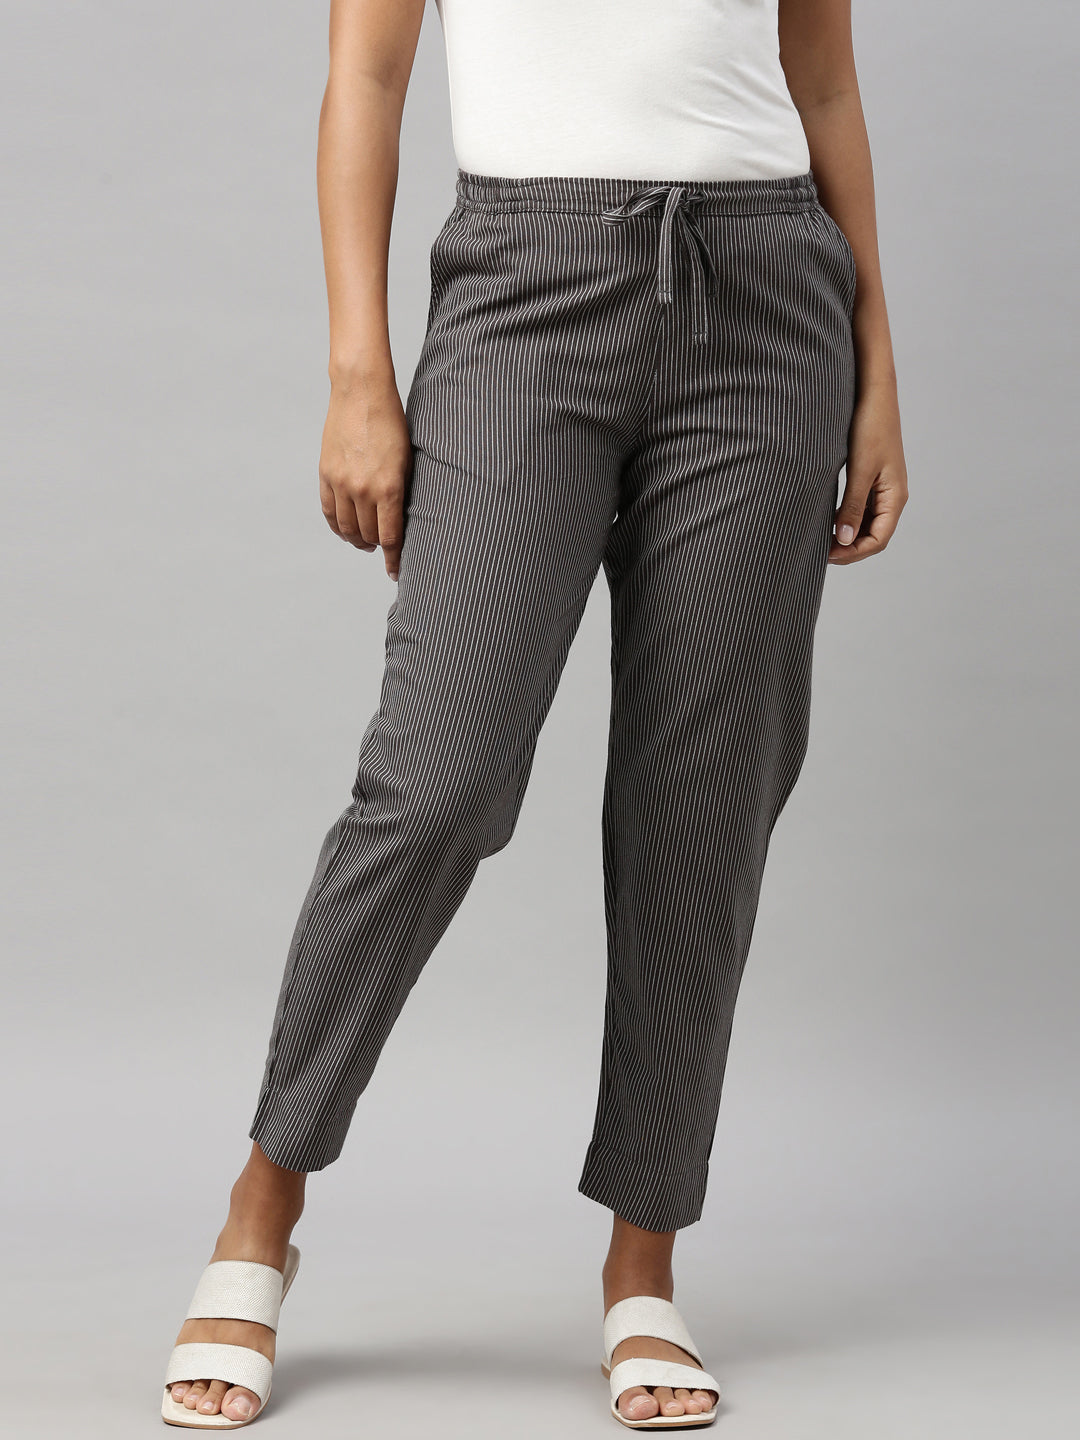 Cheap Women High Waist Stretch Denim Jeans Button Skinny Slim Casual Pencil  Pants Ladies Trousers | Joom